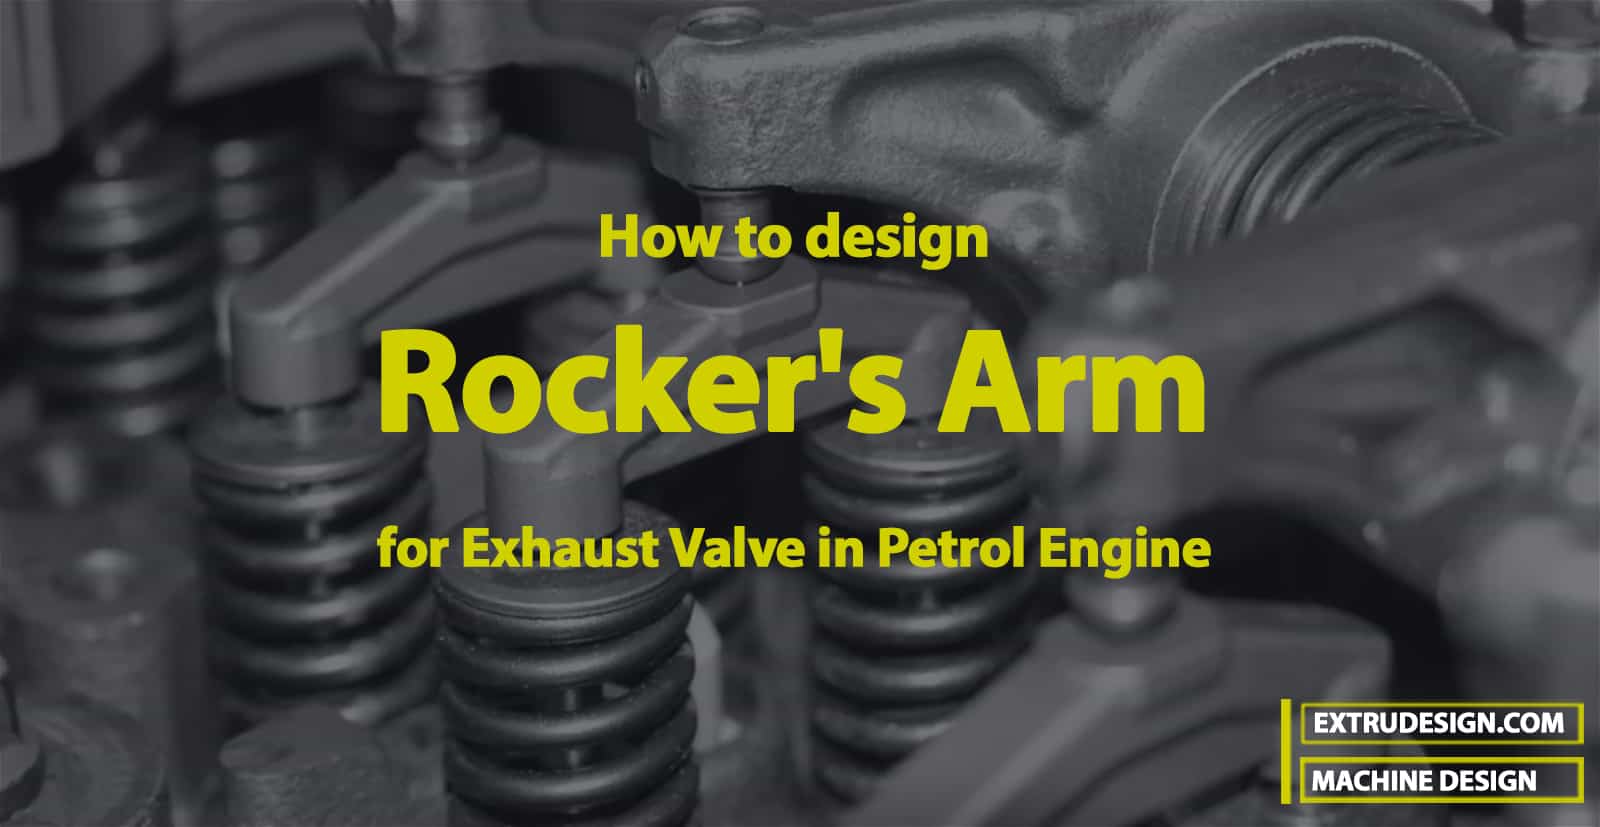 Procedure for Designing Rocker's Arm for Exhaust Valve